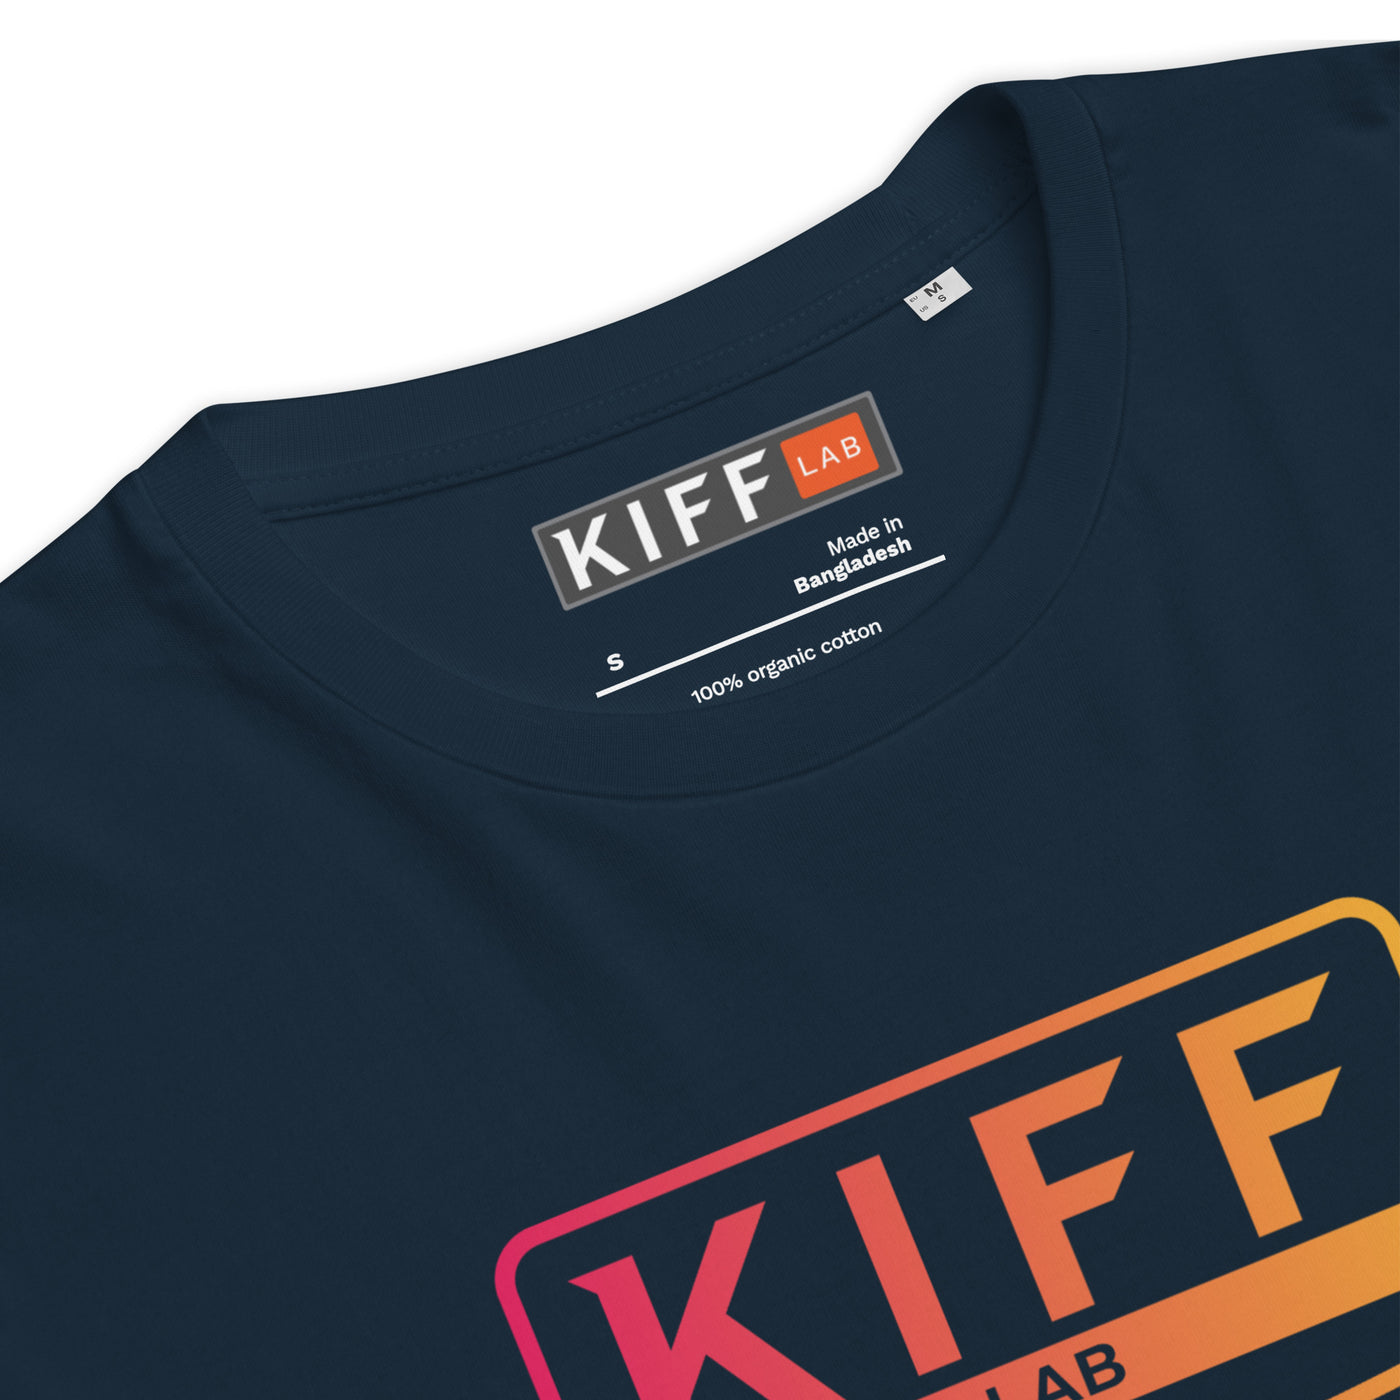 KiffLab Vibe Unisex Organic Cotton T-shirt